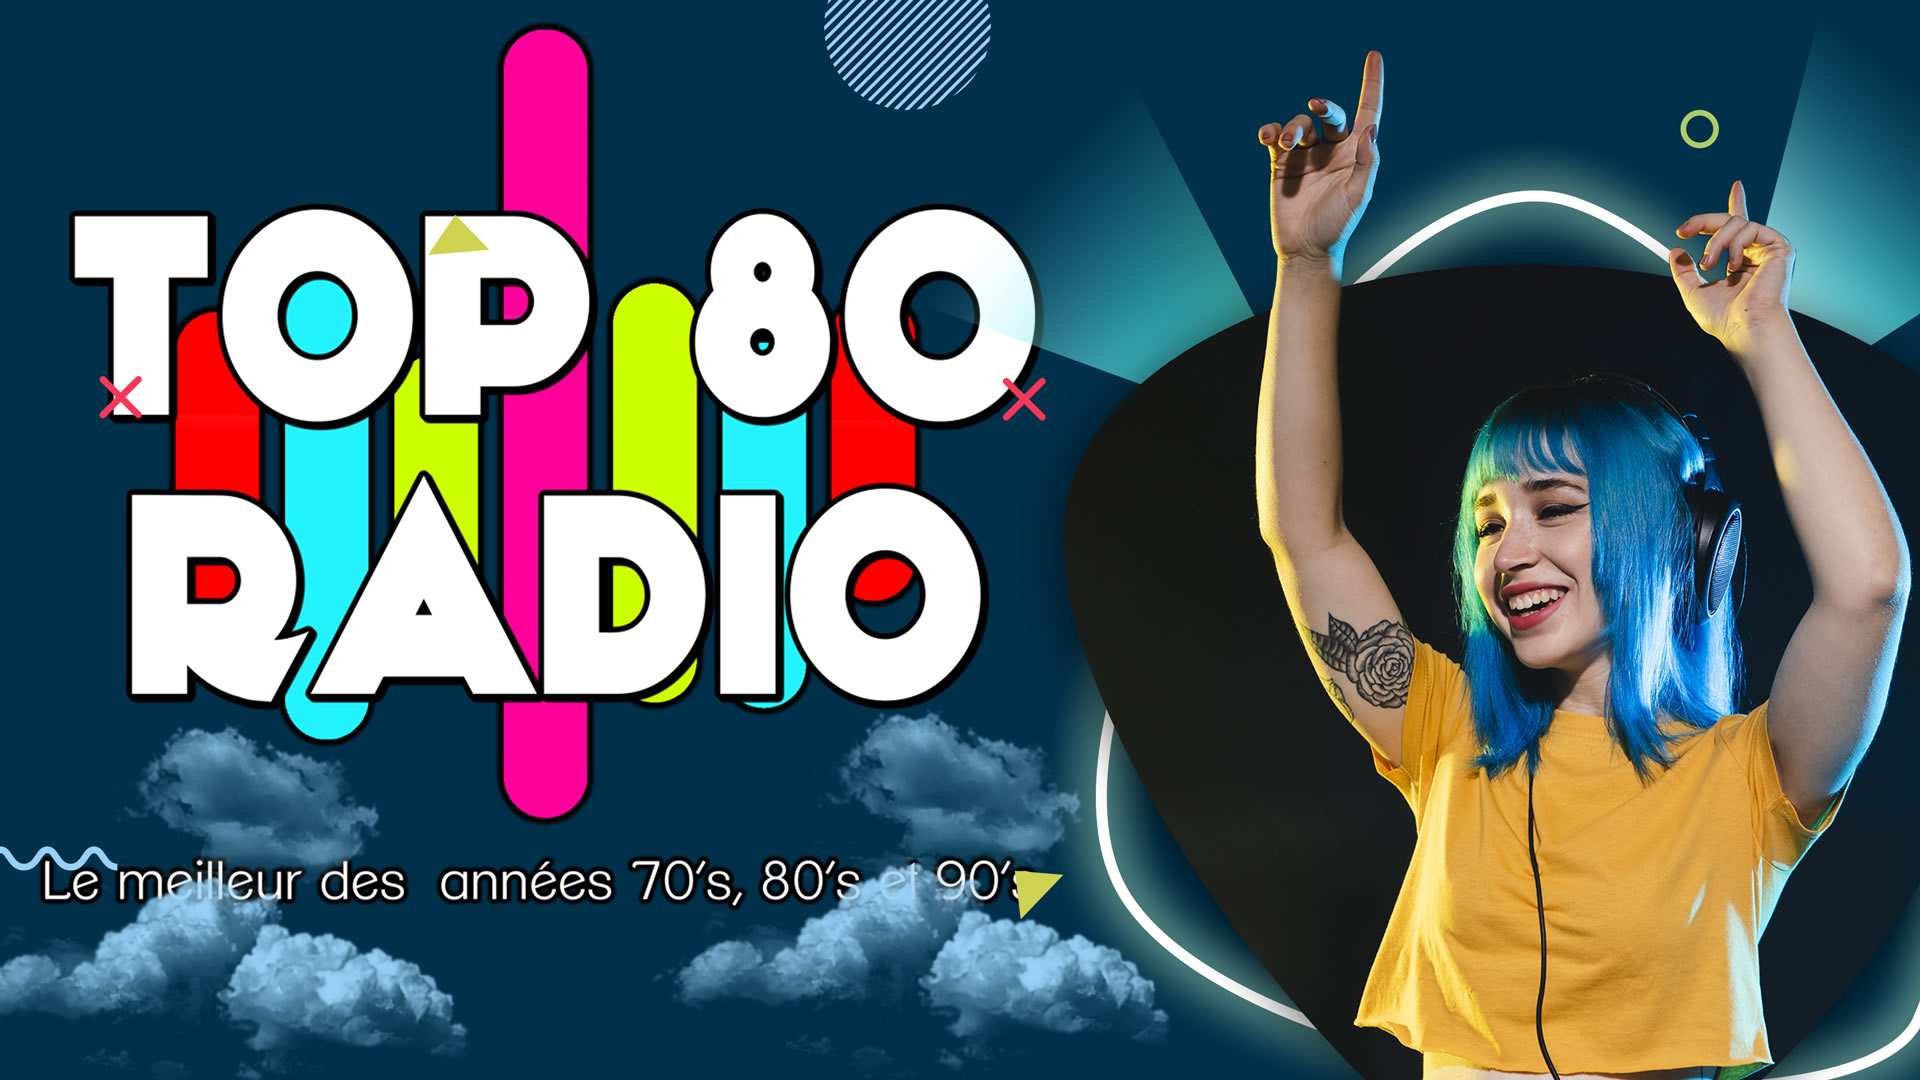 WALLPAPER–TOP-80-RADIO—68